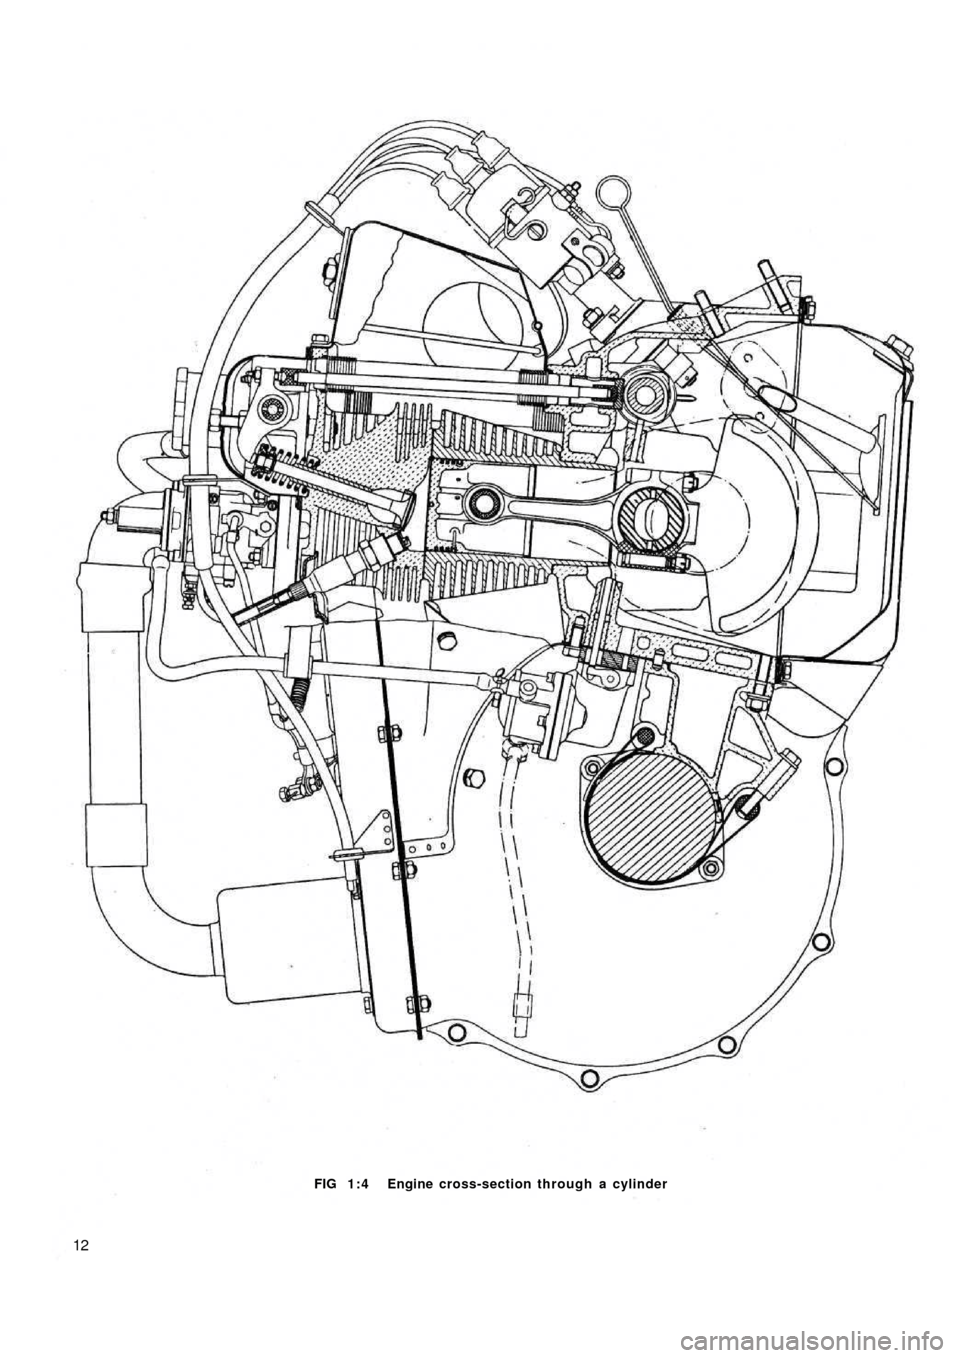 FIAT 500 1964 1.G Workshop Manual FIG 1 : 4  Engine cross-section through a cylinder
12 